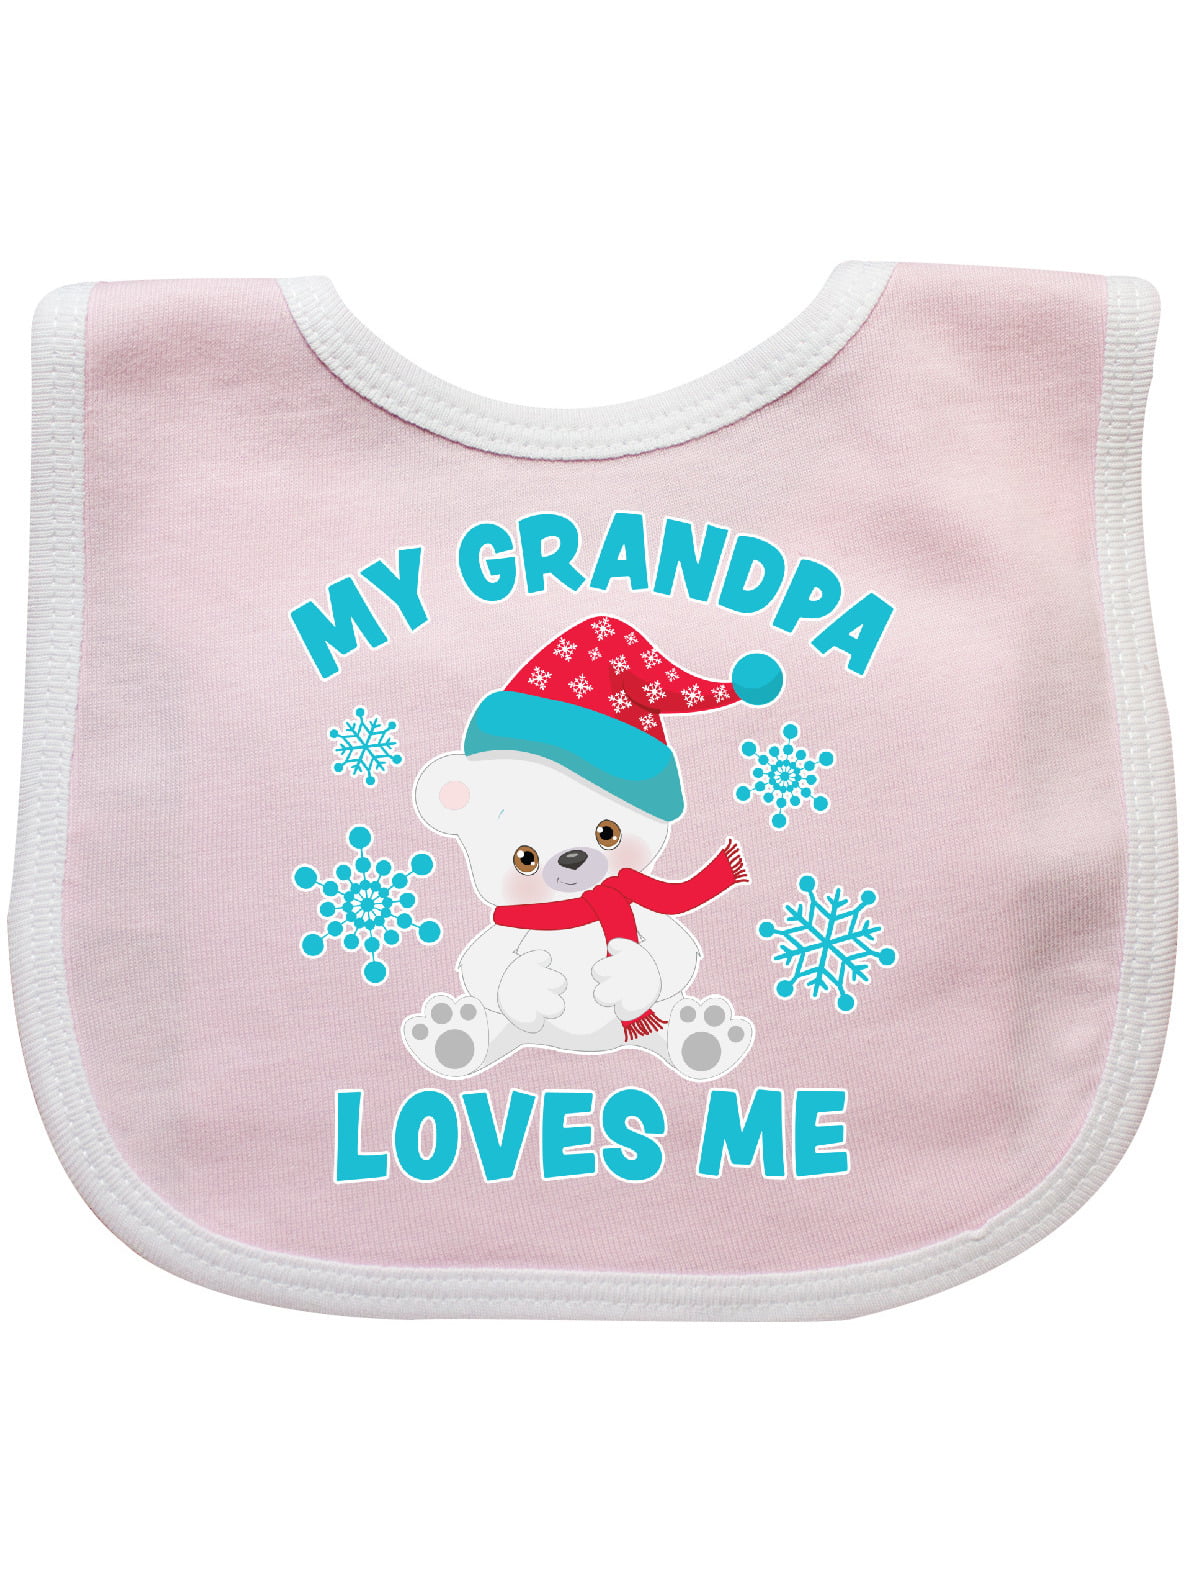 Polar Bear My Grandpa Loves Me in Santa Hat with Snowflakes Baby Bib ...